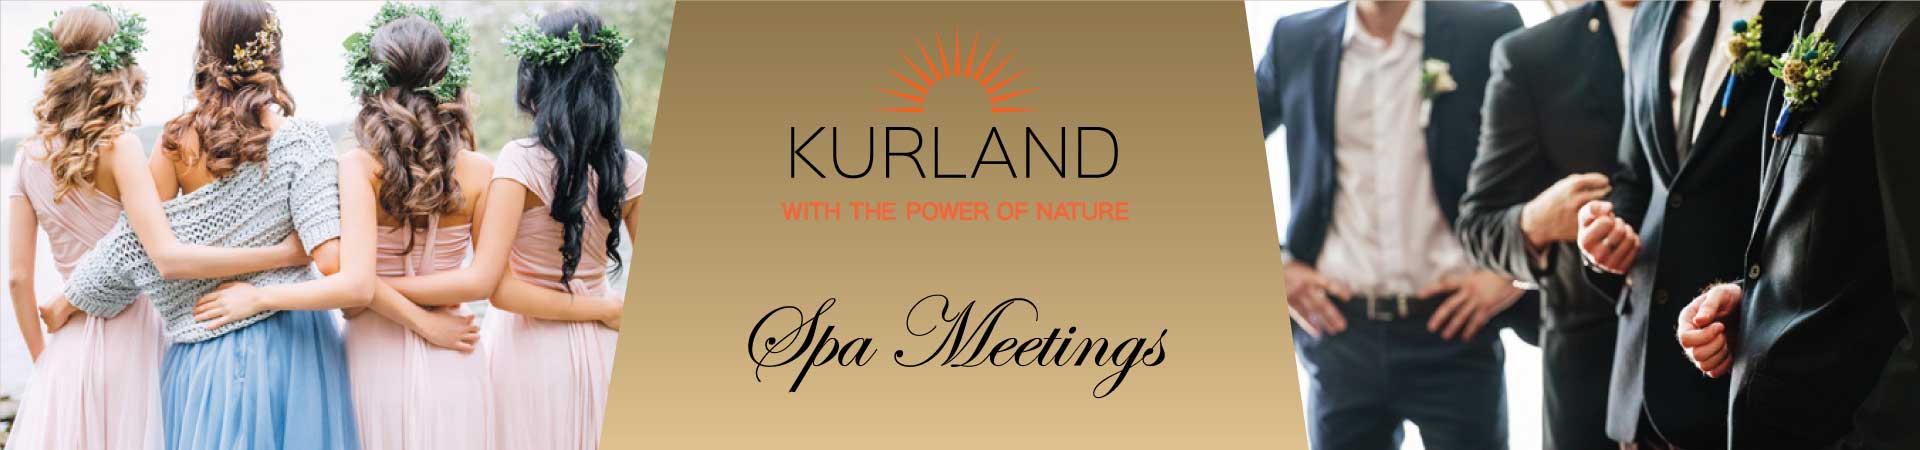 Spa Meetings by Kurland Spa